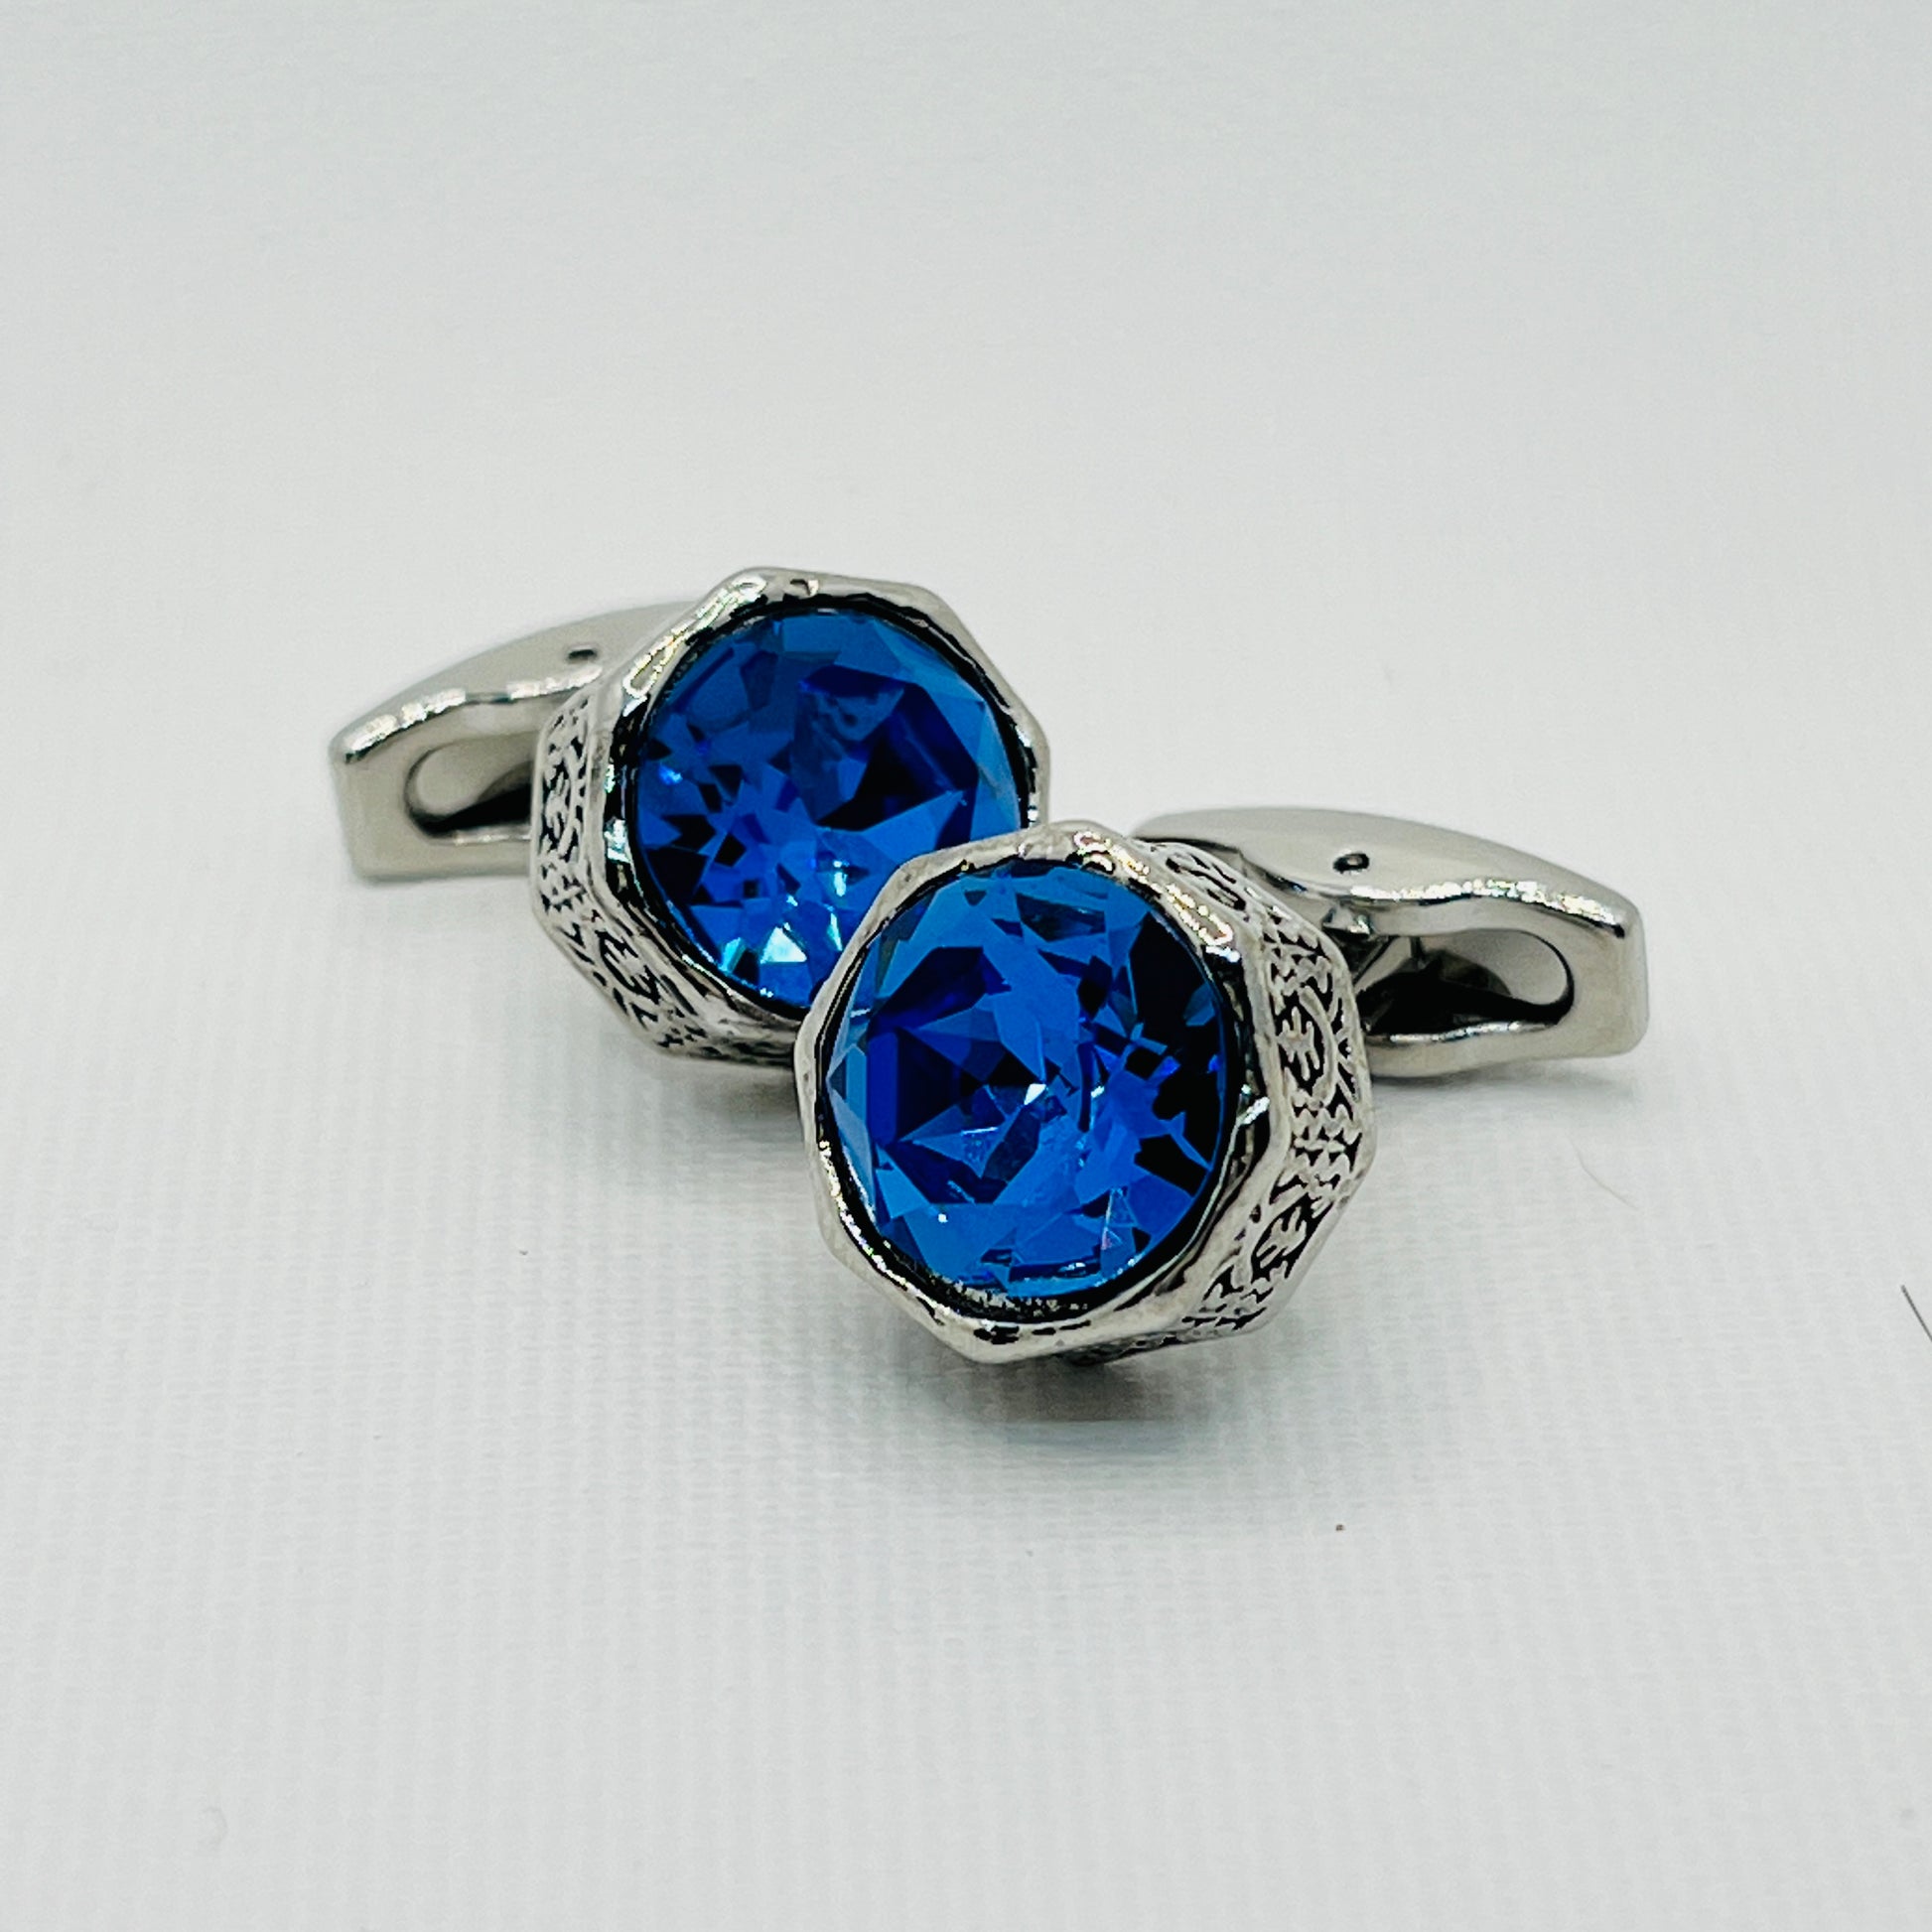 Tasker & Shaw | Luxury Menswear | Octagonal carved cufflinks with large vivid blue crystal